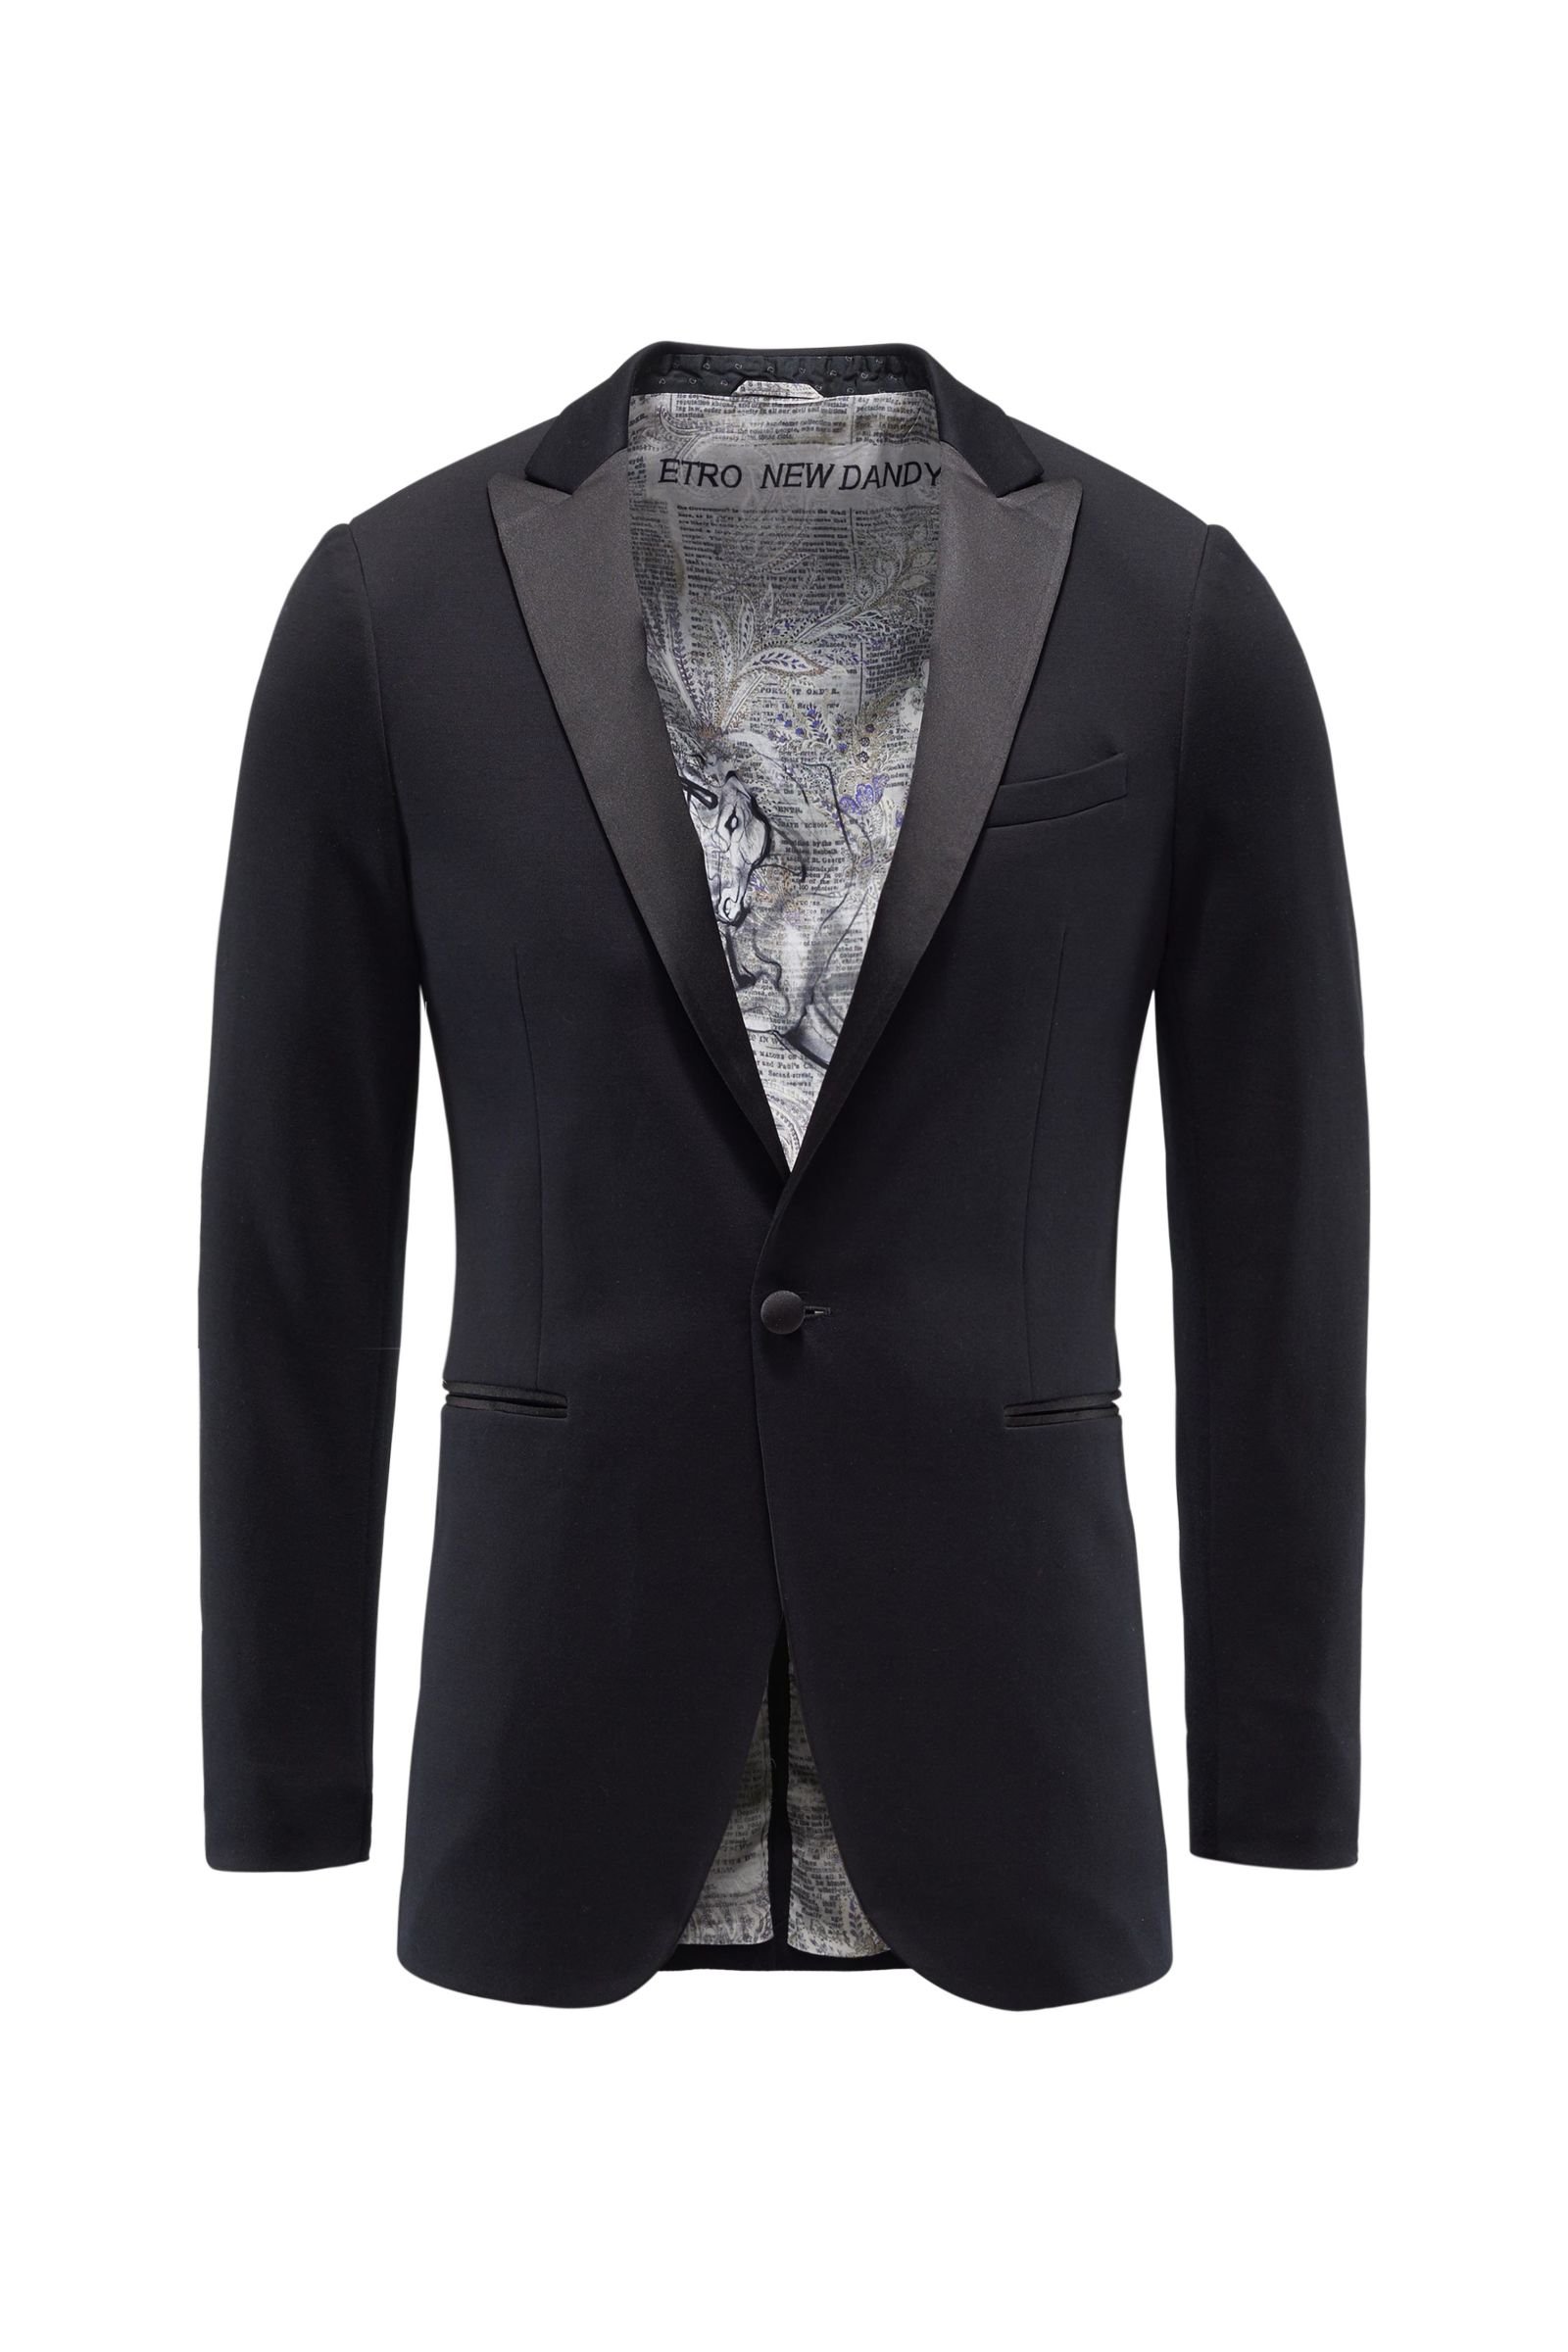 Jersey tuxedo jacket black